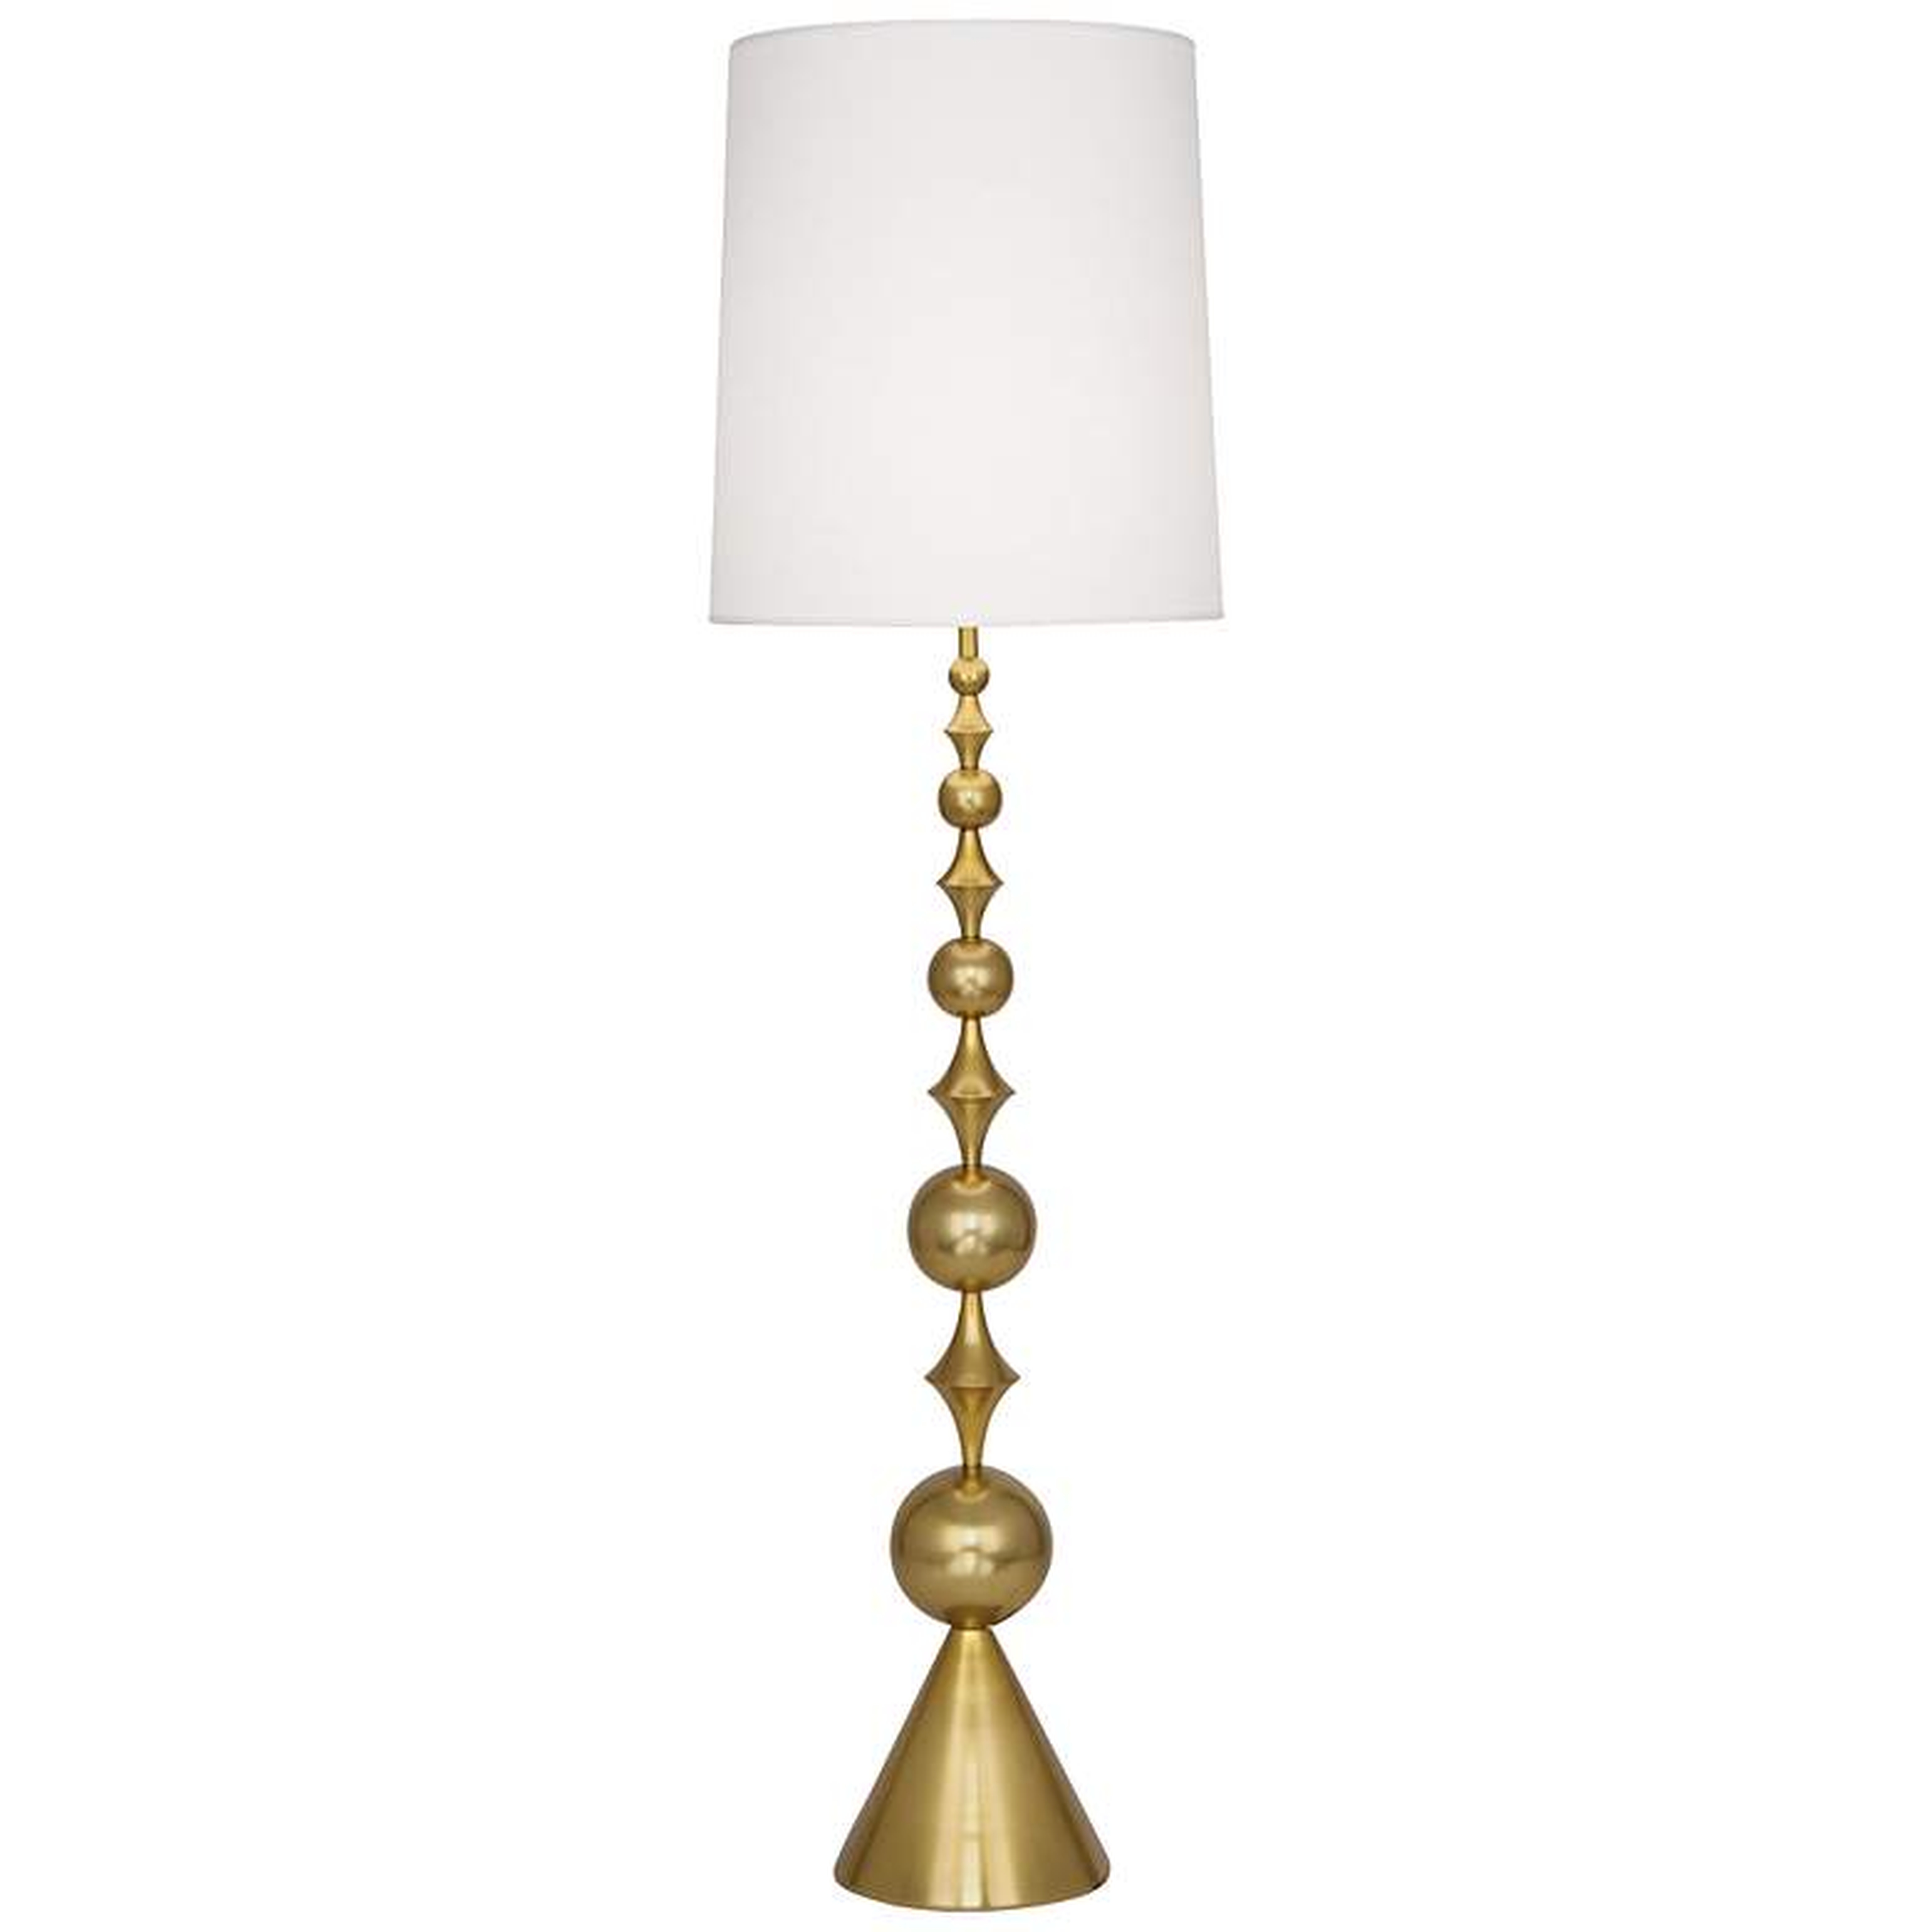 Harlequin Floor Lamp in Antique Brass by Jonathan Adler - Lamps Plus